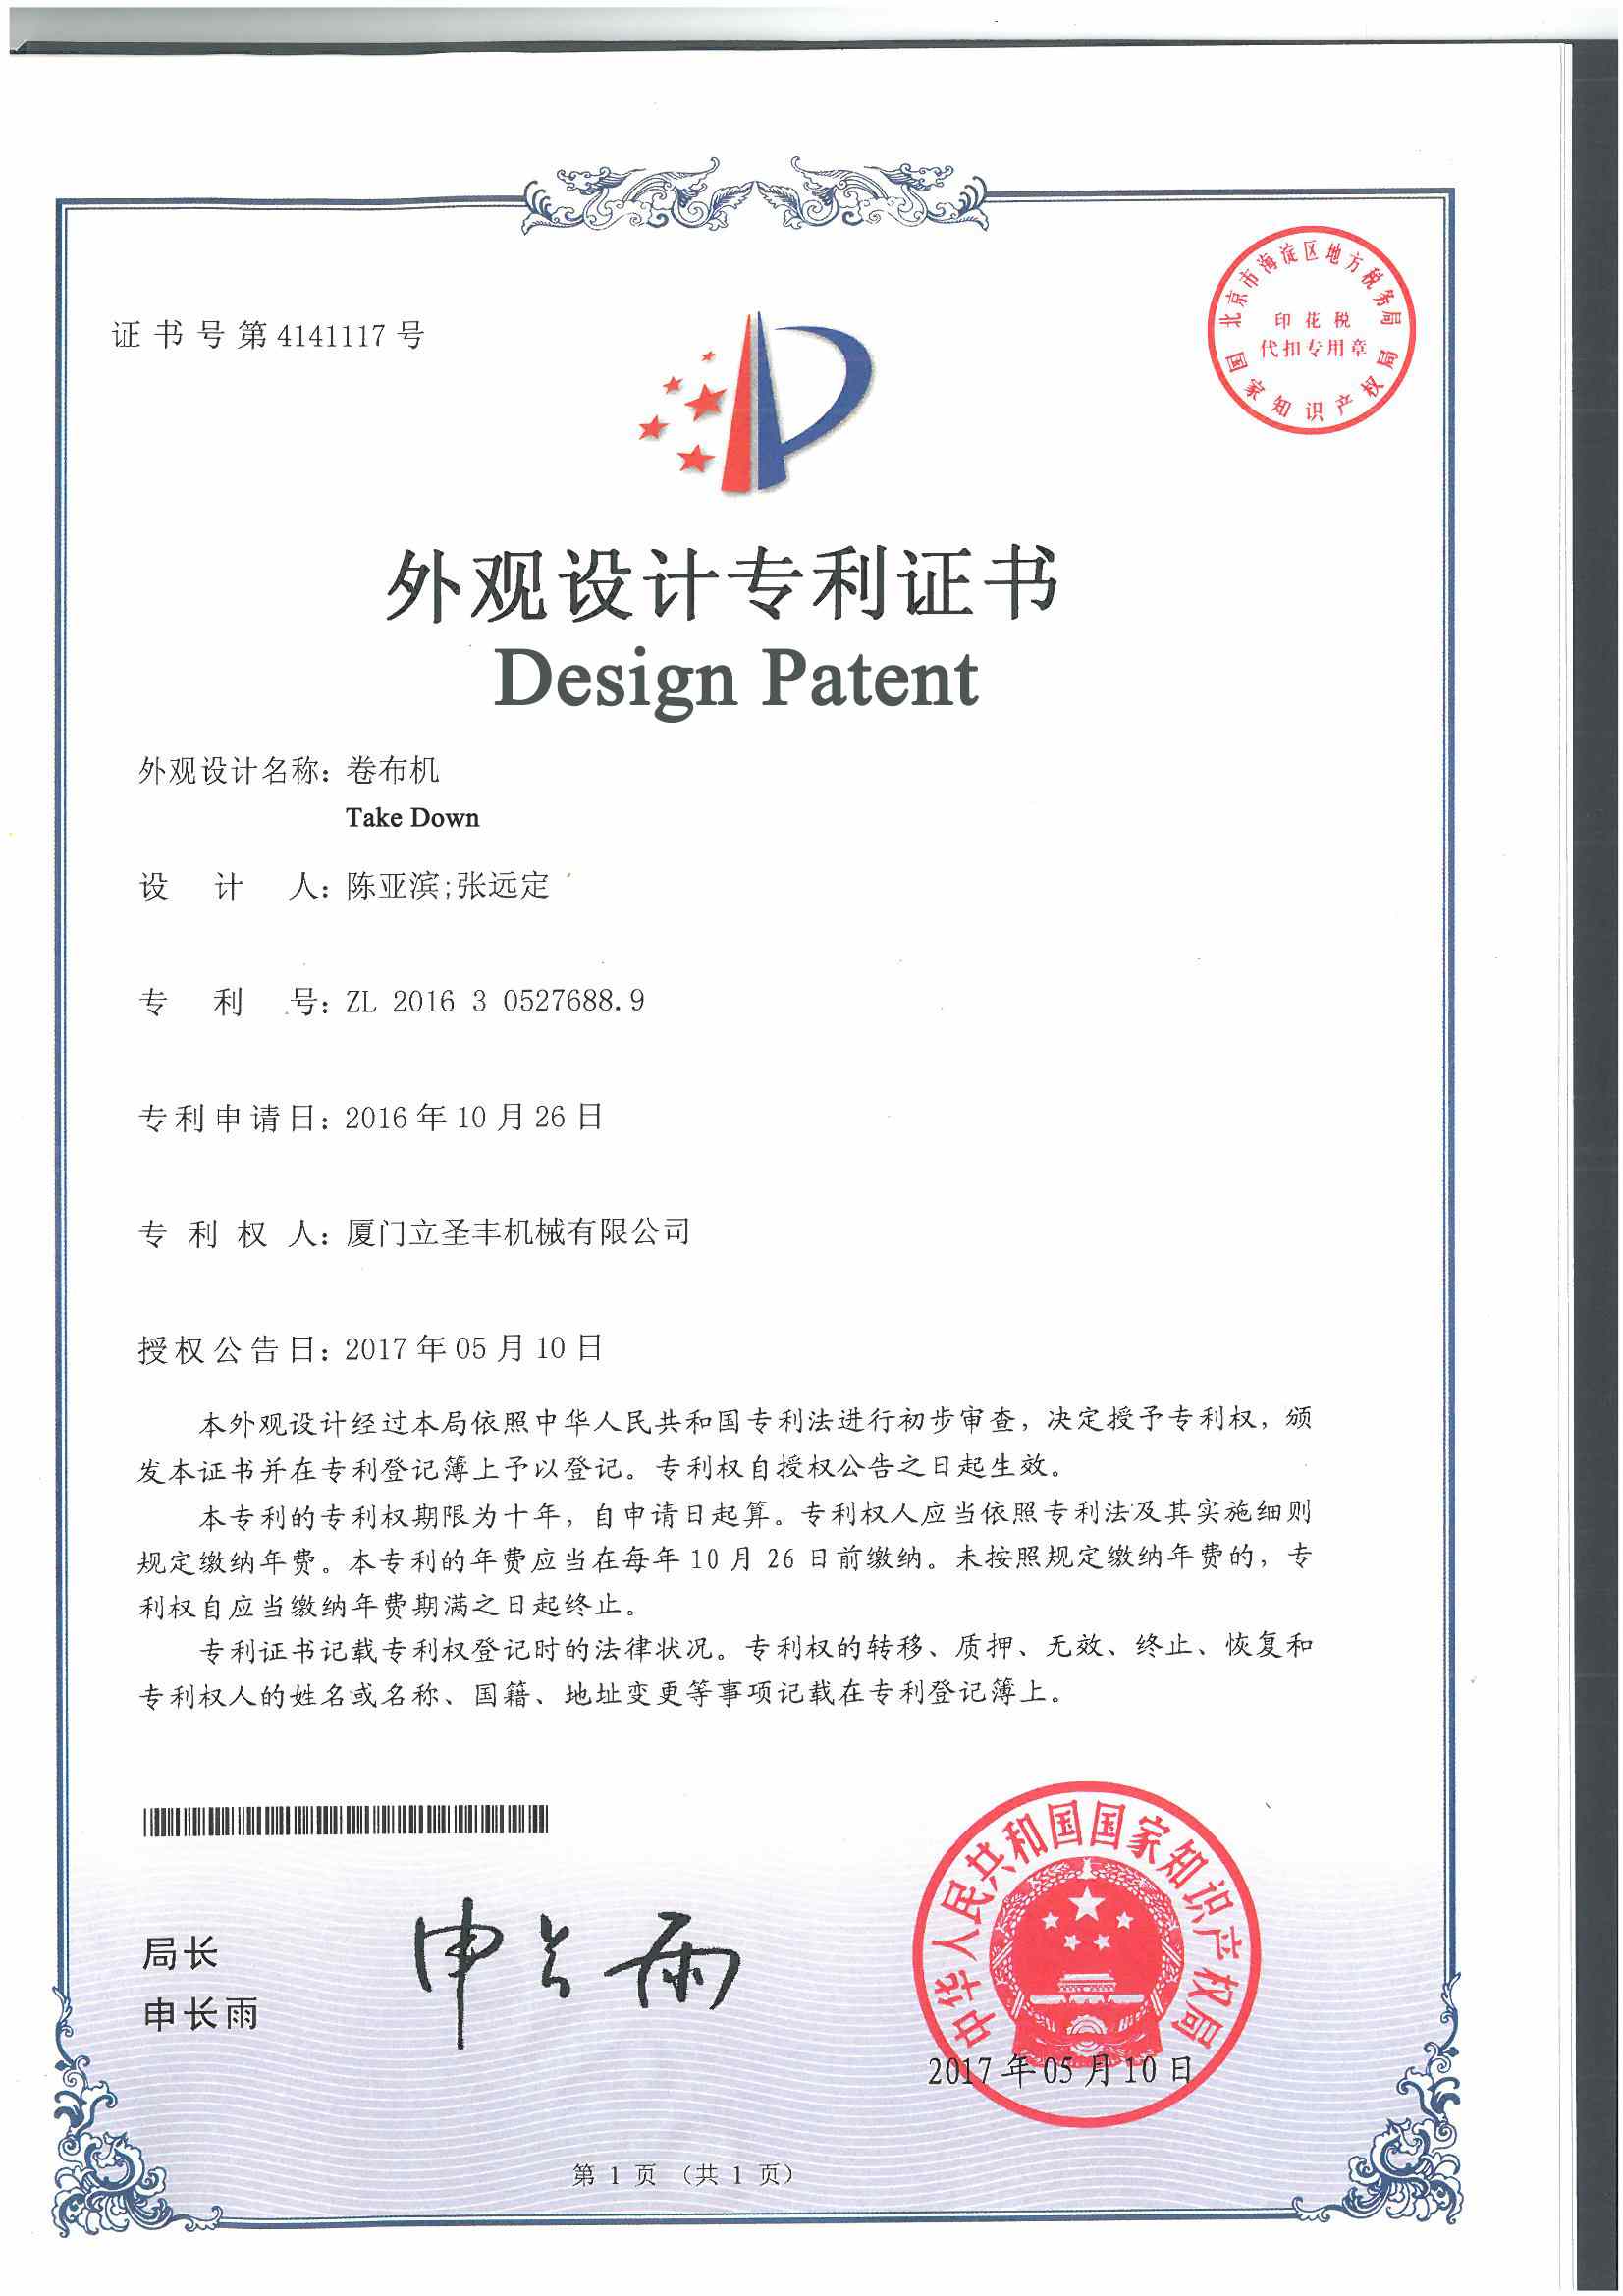 патенты
